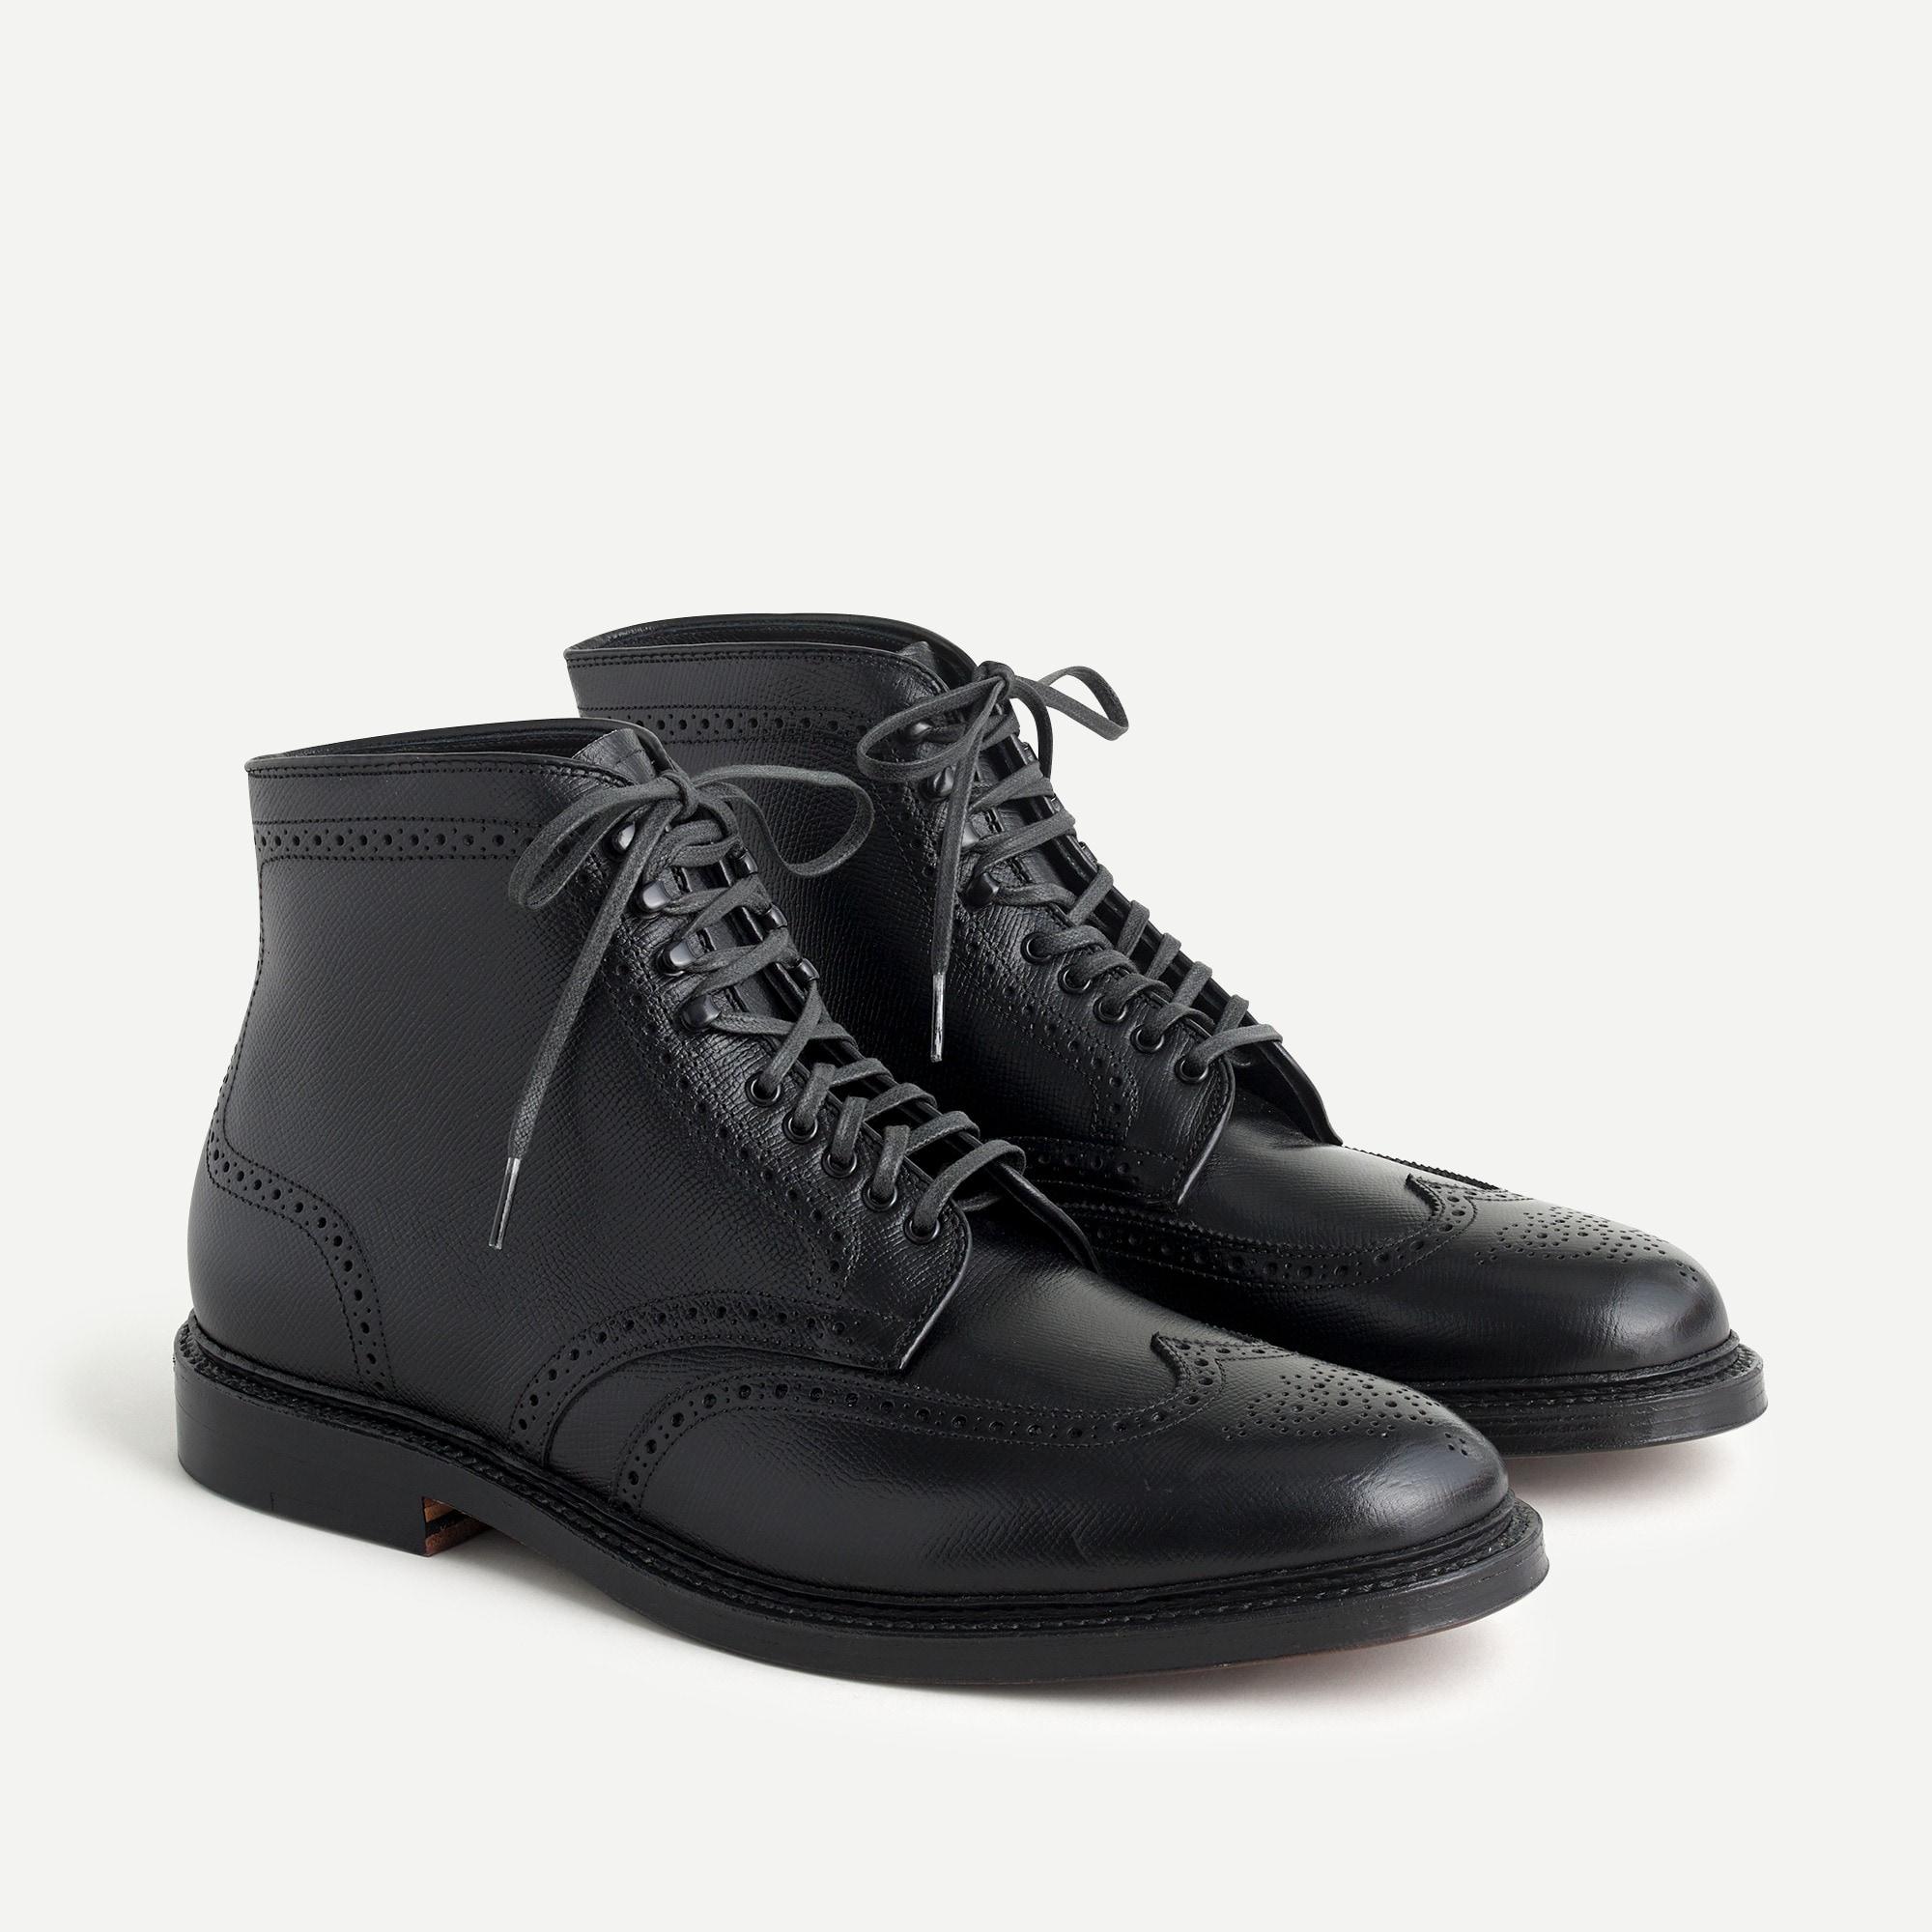 Alden ® For J.crew Pebbled Leather Wing Tip Boots in Black for Men - Lyst